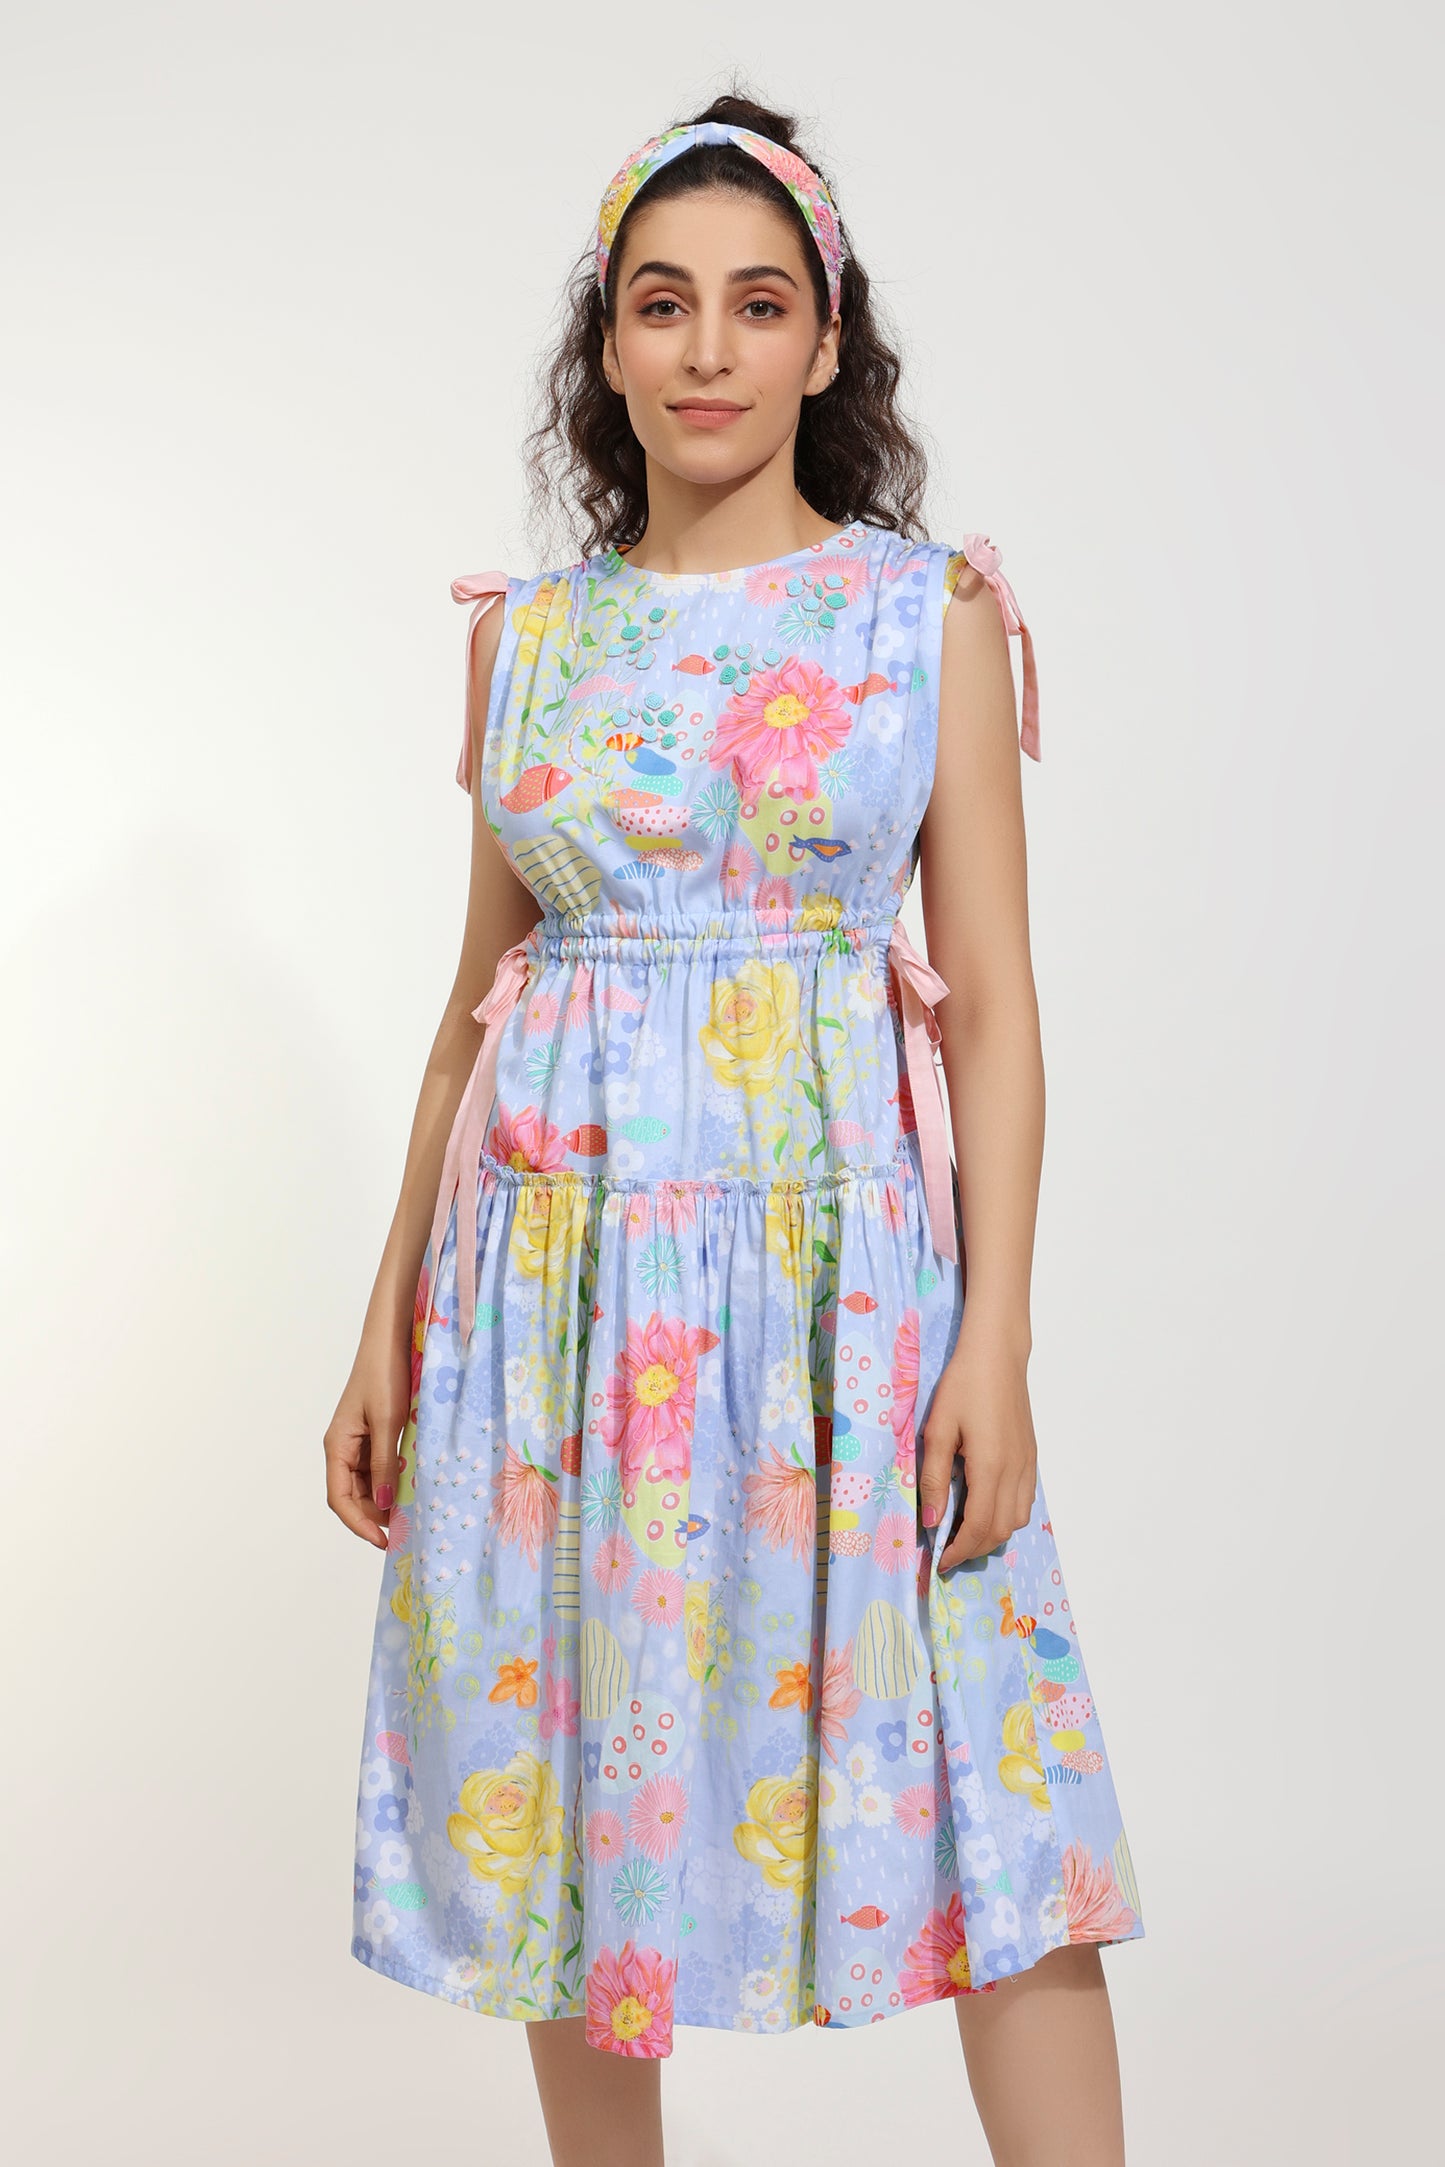 Dandy Bloom Embellished Printed Cut Out Dress (Joey & Pooh)